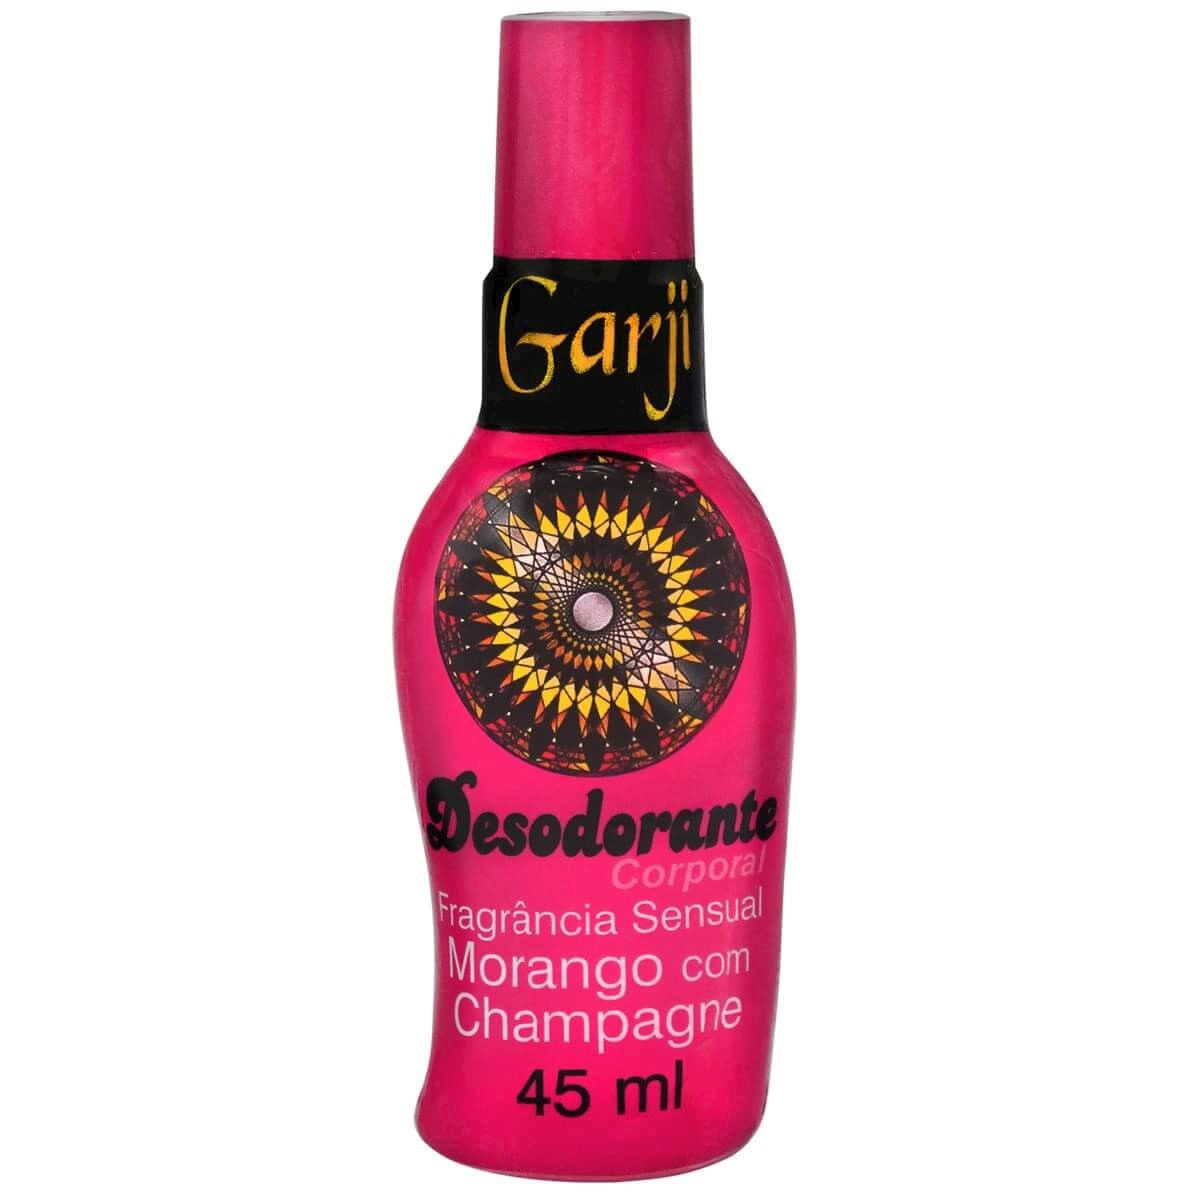 Desodorante Corporal Morango com Champagne 45ml Garji